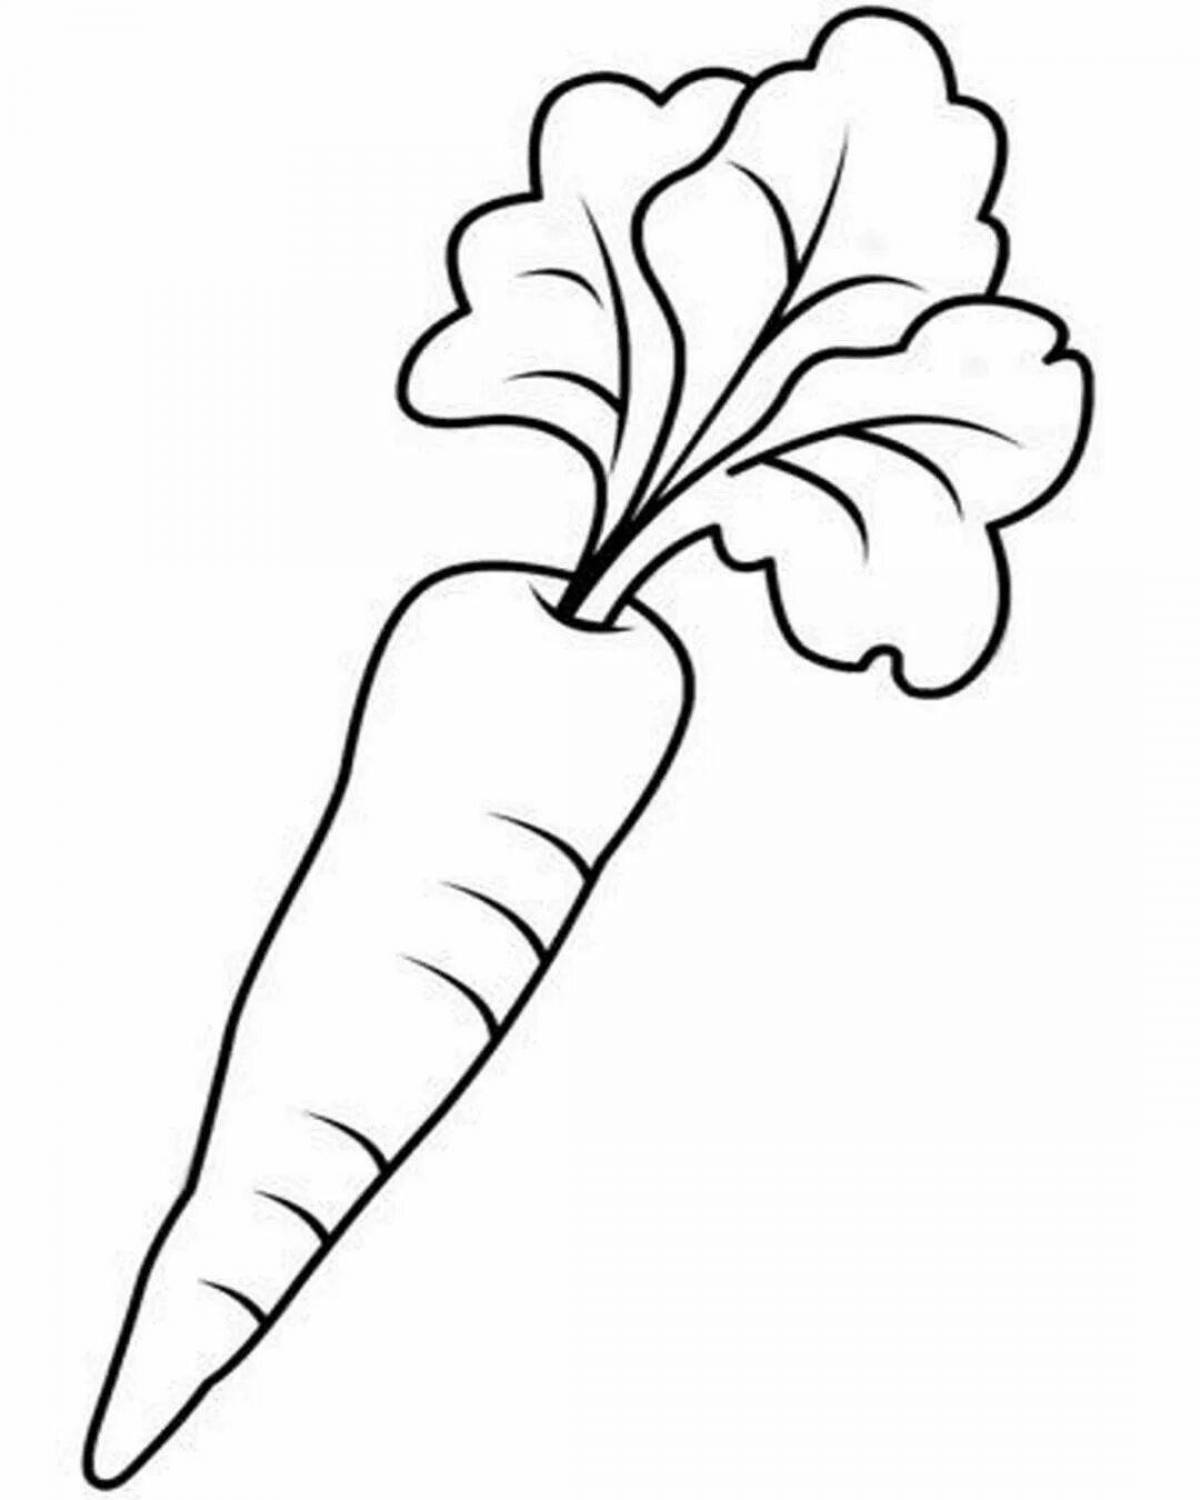 Fun coloring of vegetables for preschoolers 2-3